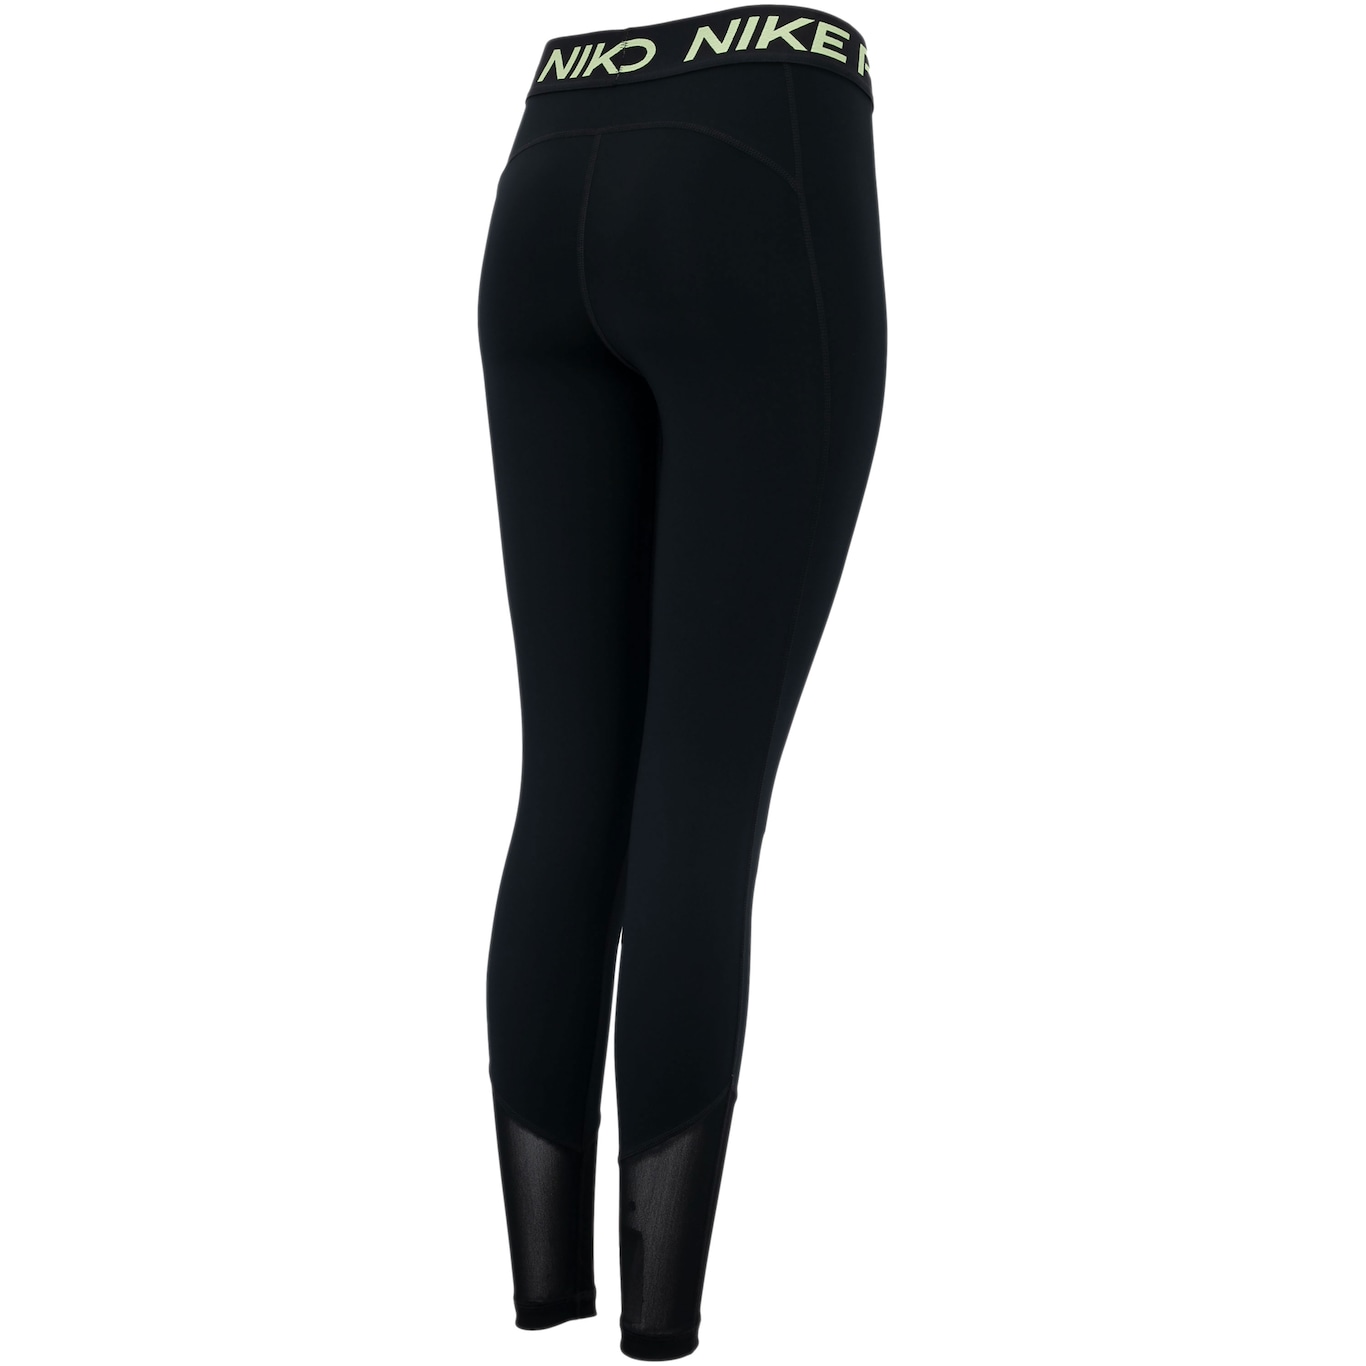 Legging Nike Pro, Calça Feminina Nike Nunca Usado 70306515